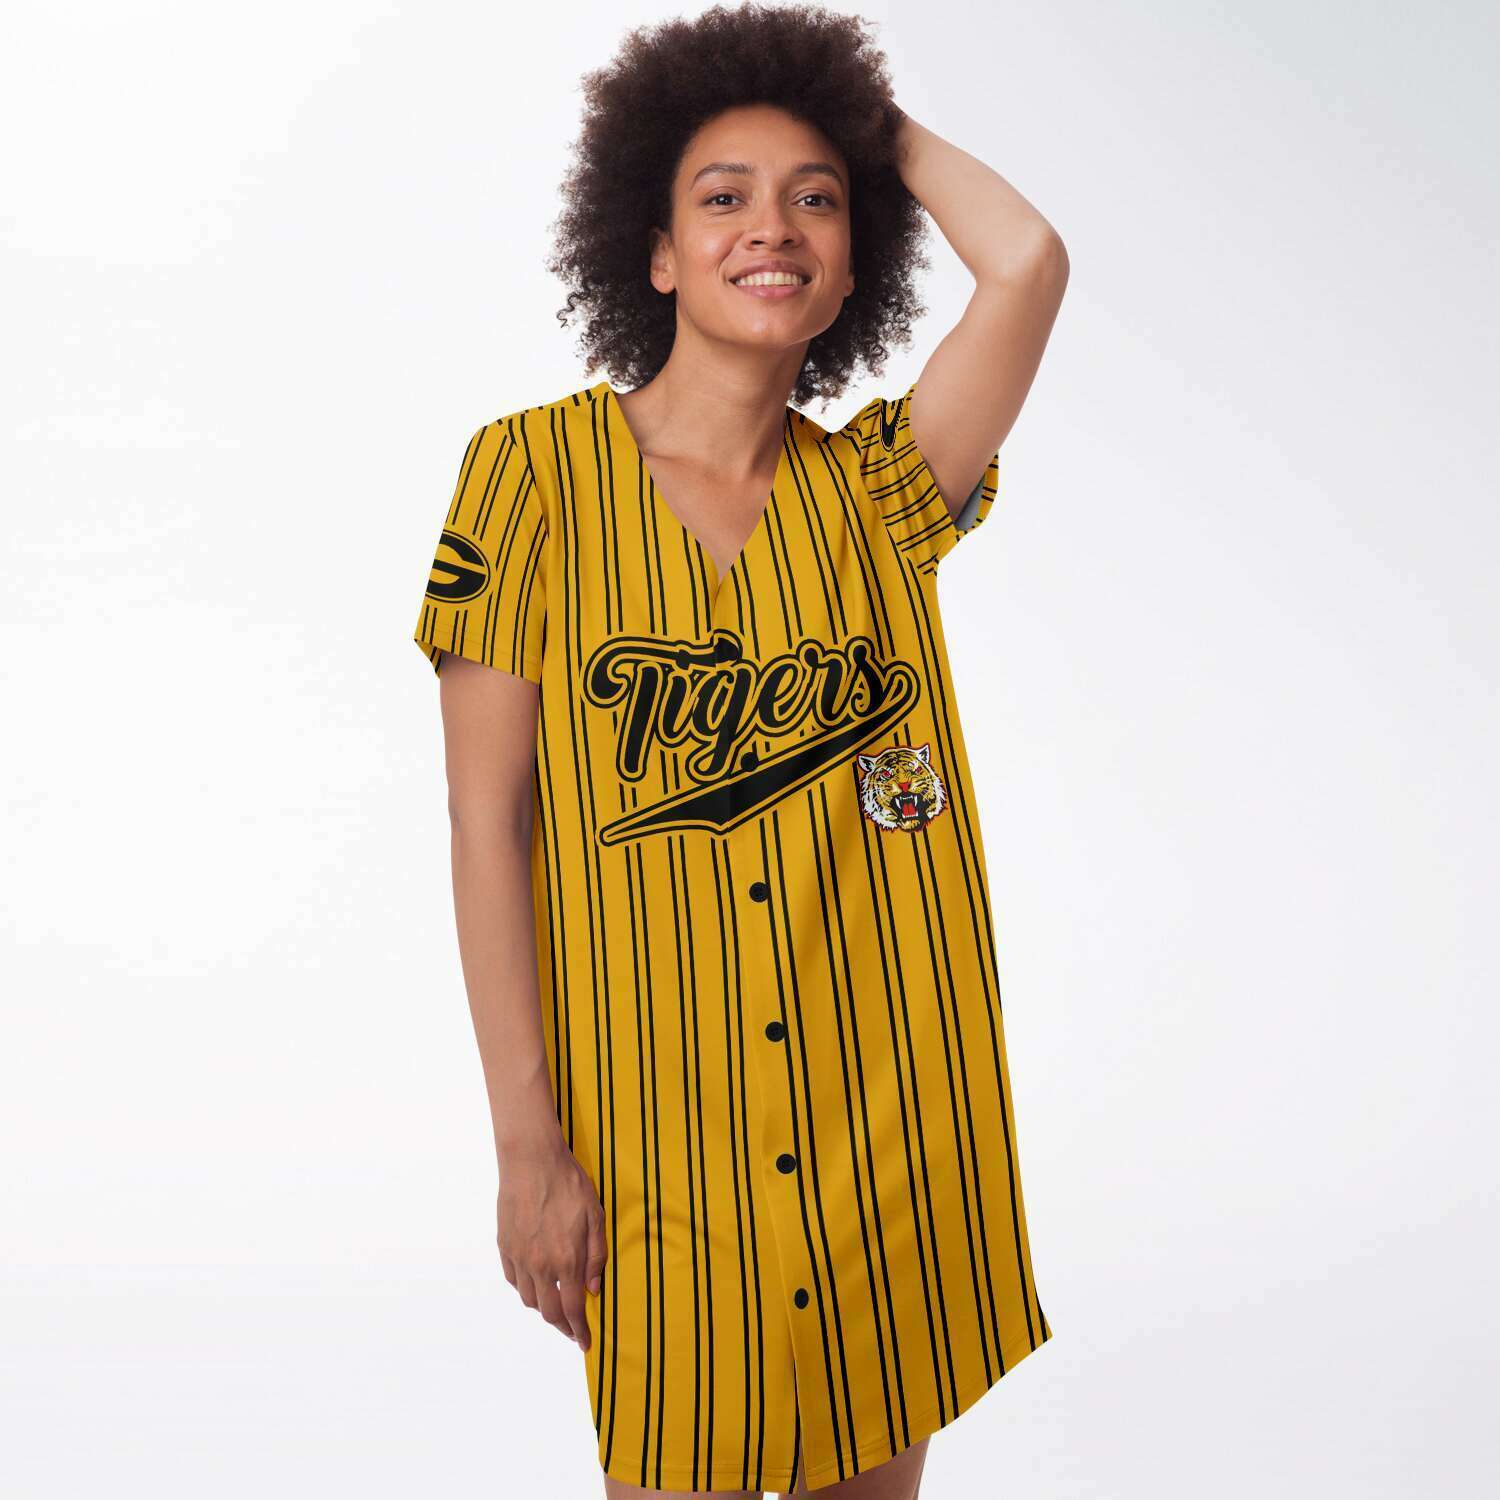 Grambling Tigers baseball jersey dress v4332 - joxtee